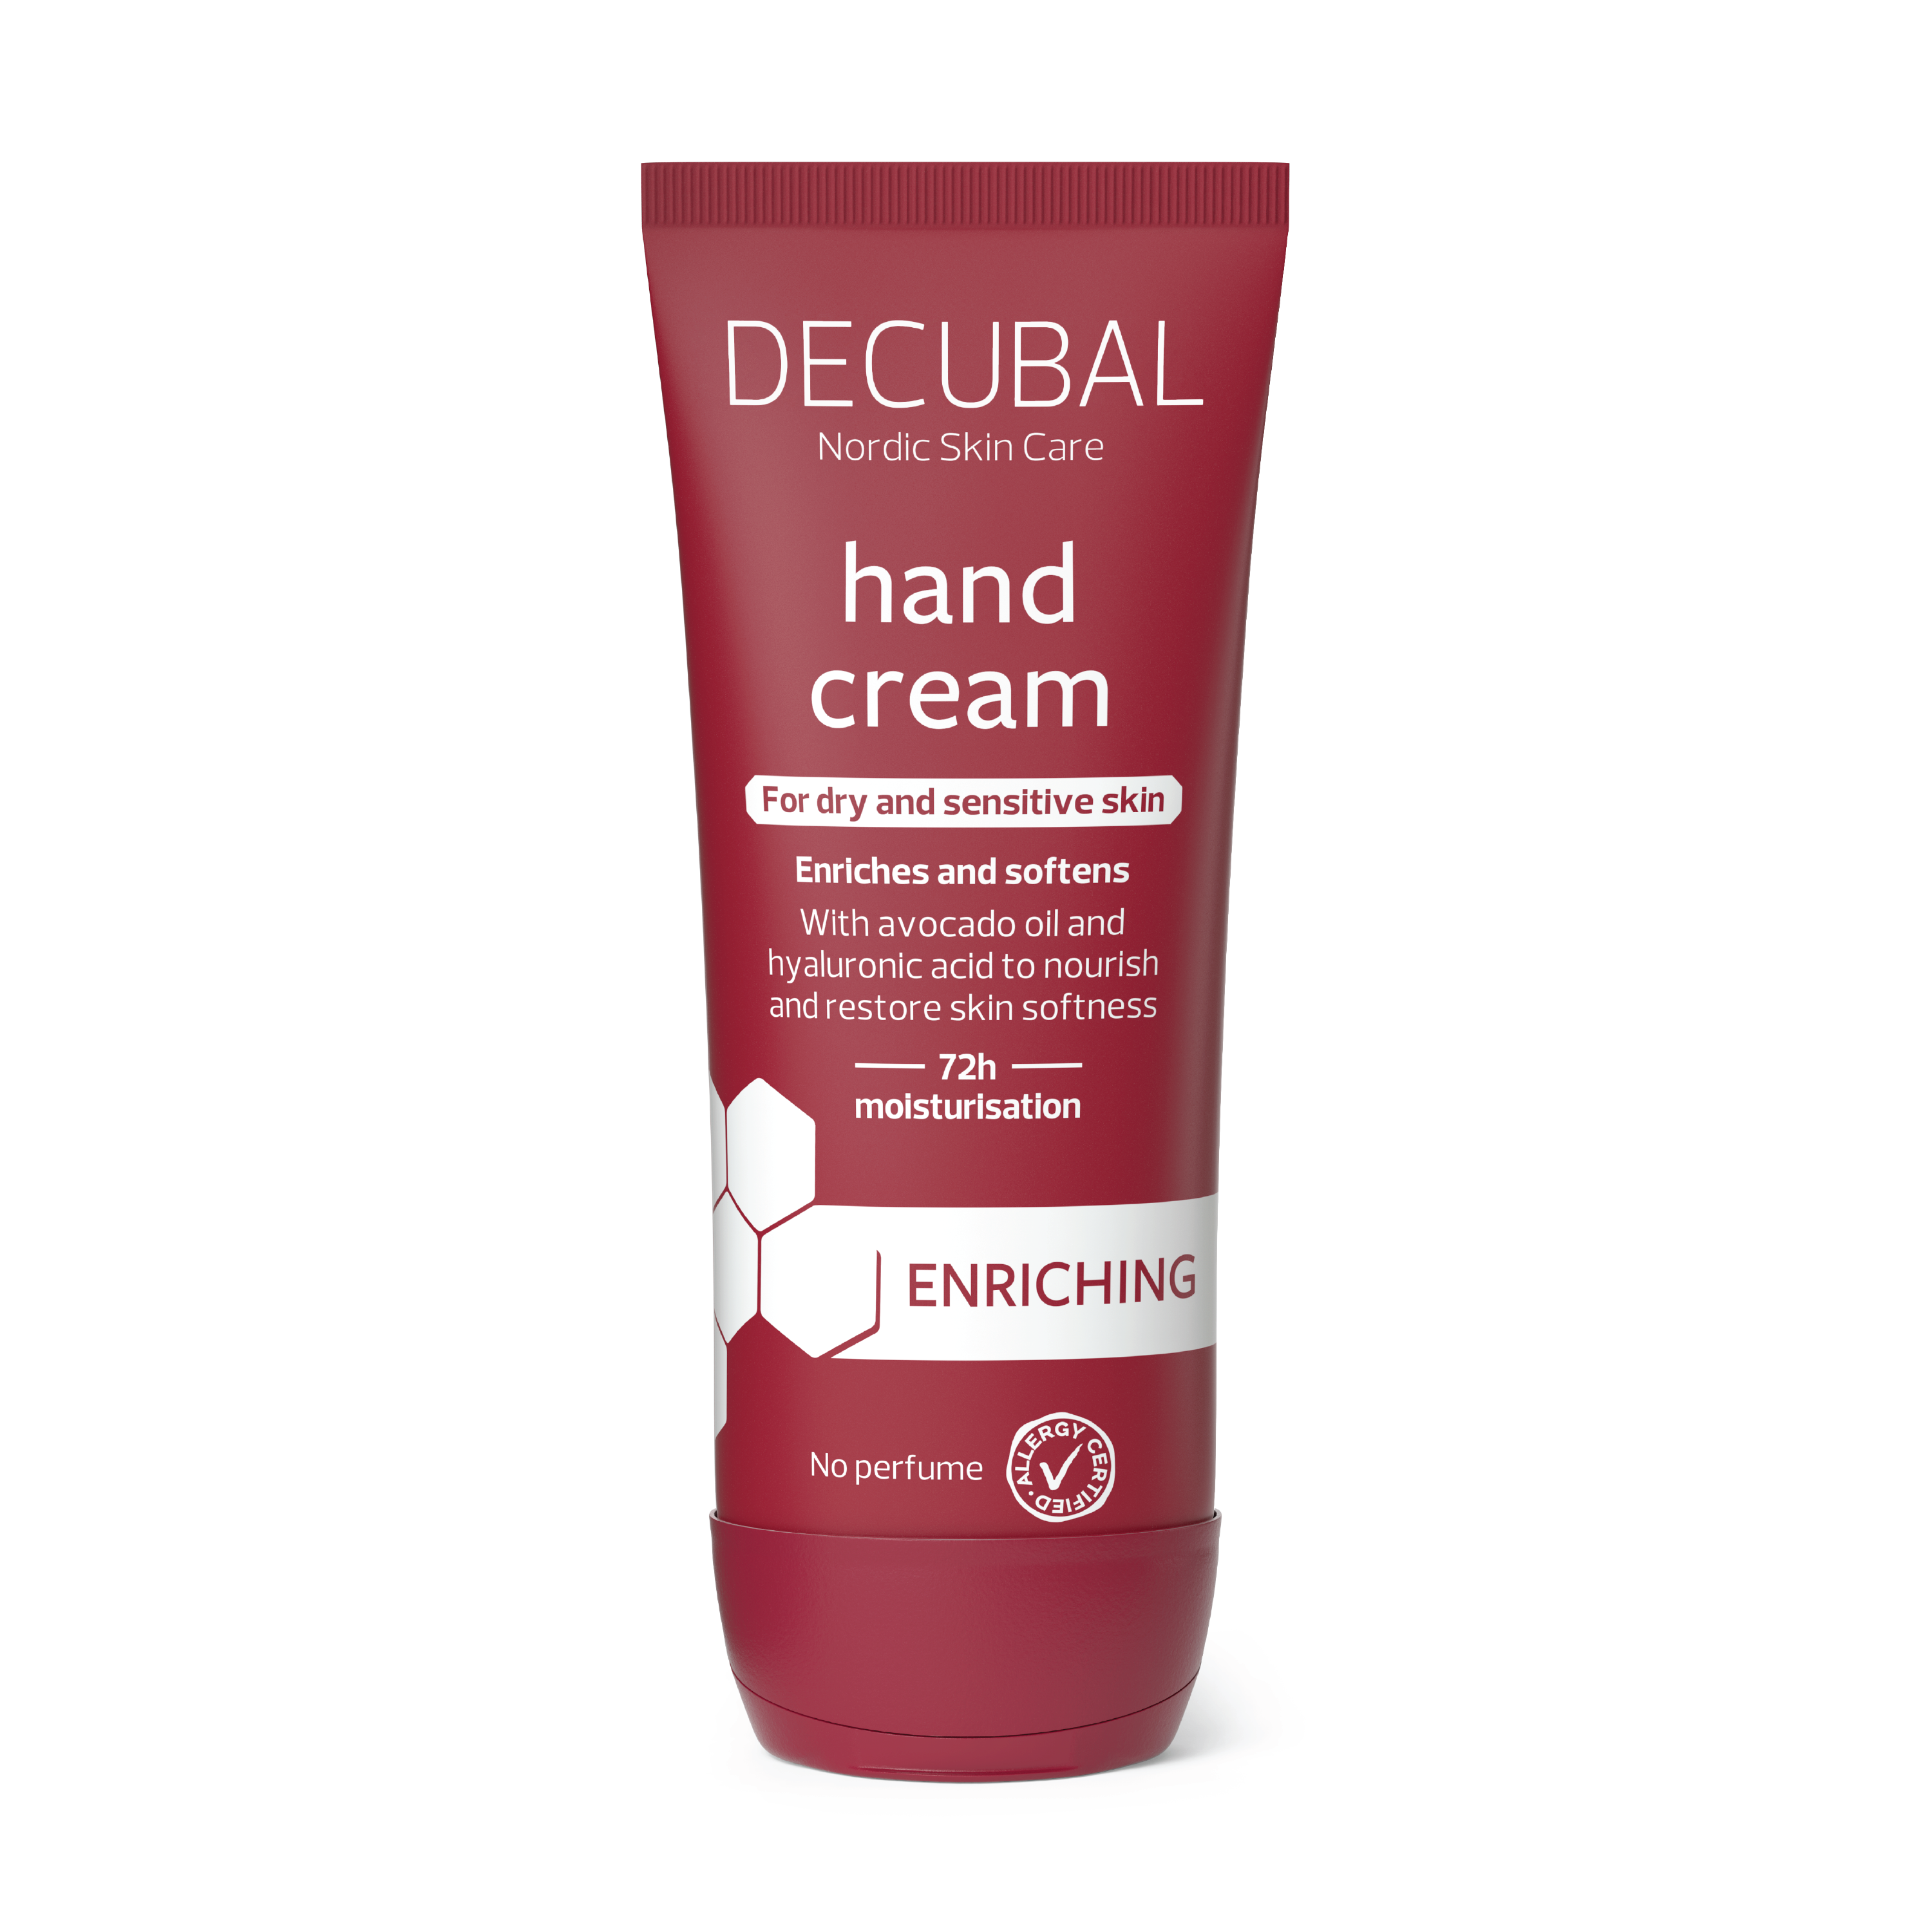 Decubal Hand Cream Daily, 100 ml